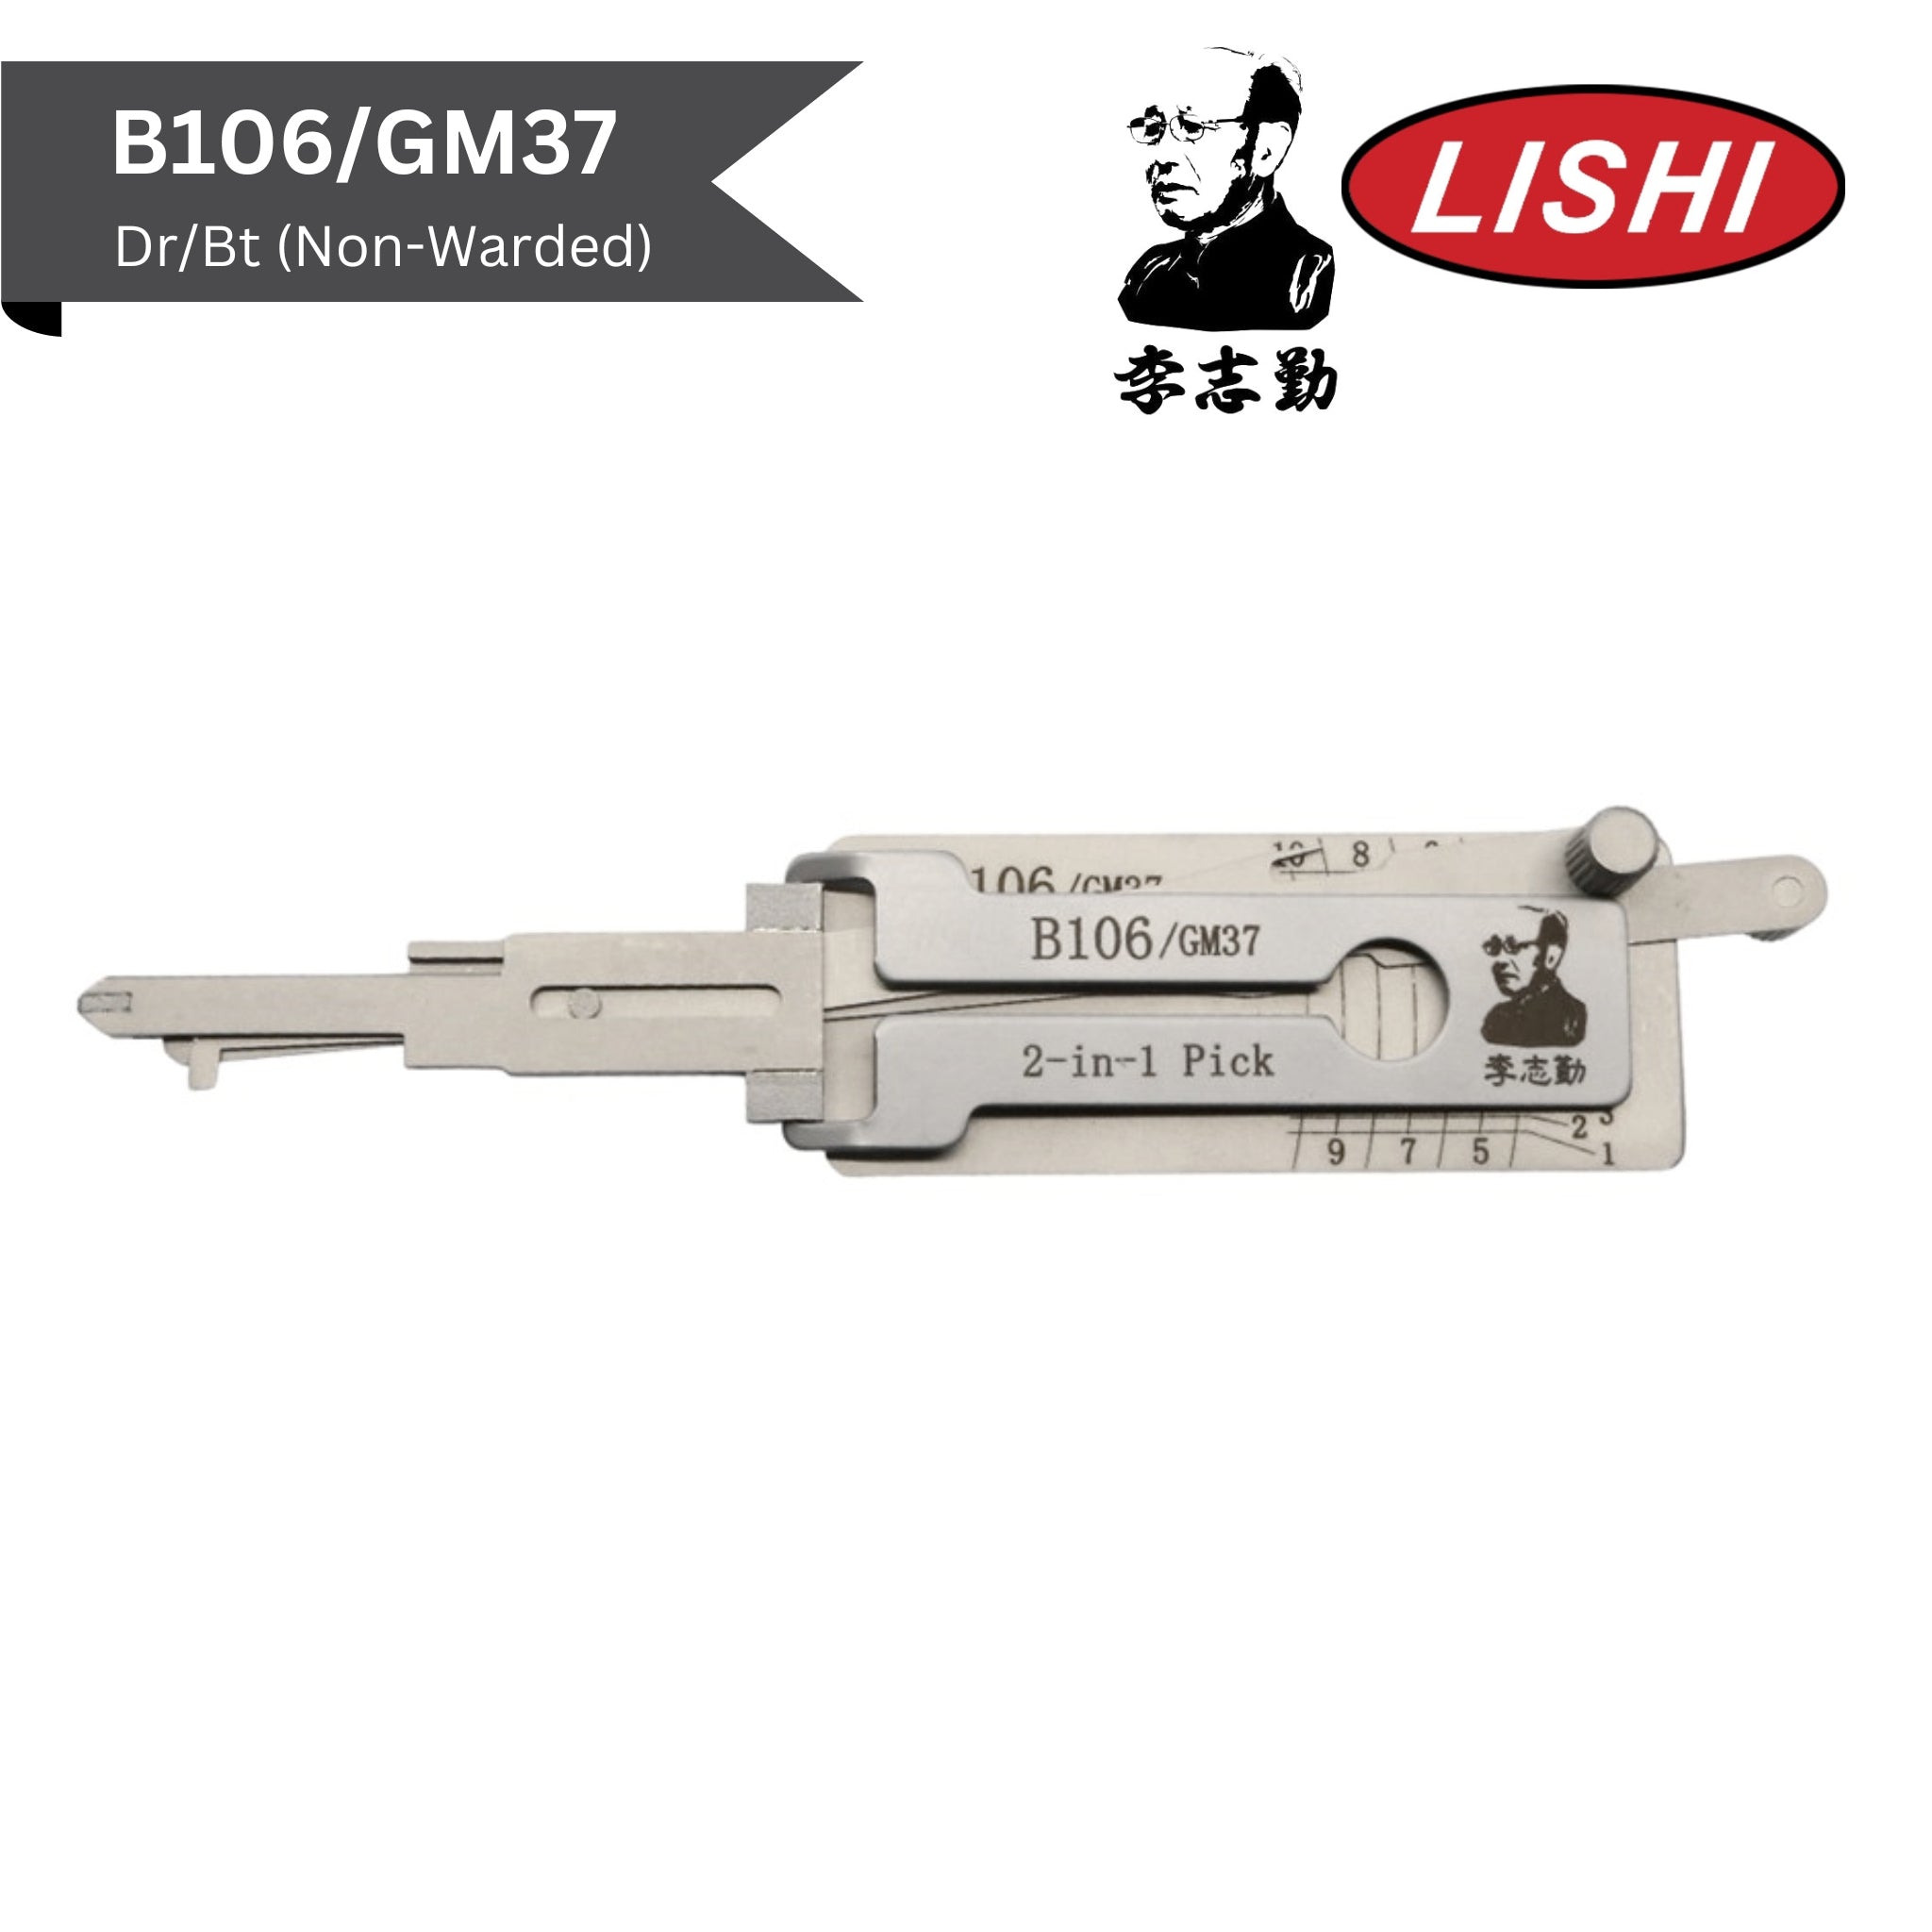 Original Lishi - GM B106/GM37 Non-Warded (Dr/Bt) - 2-In-1 Pick/Decoder - AG